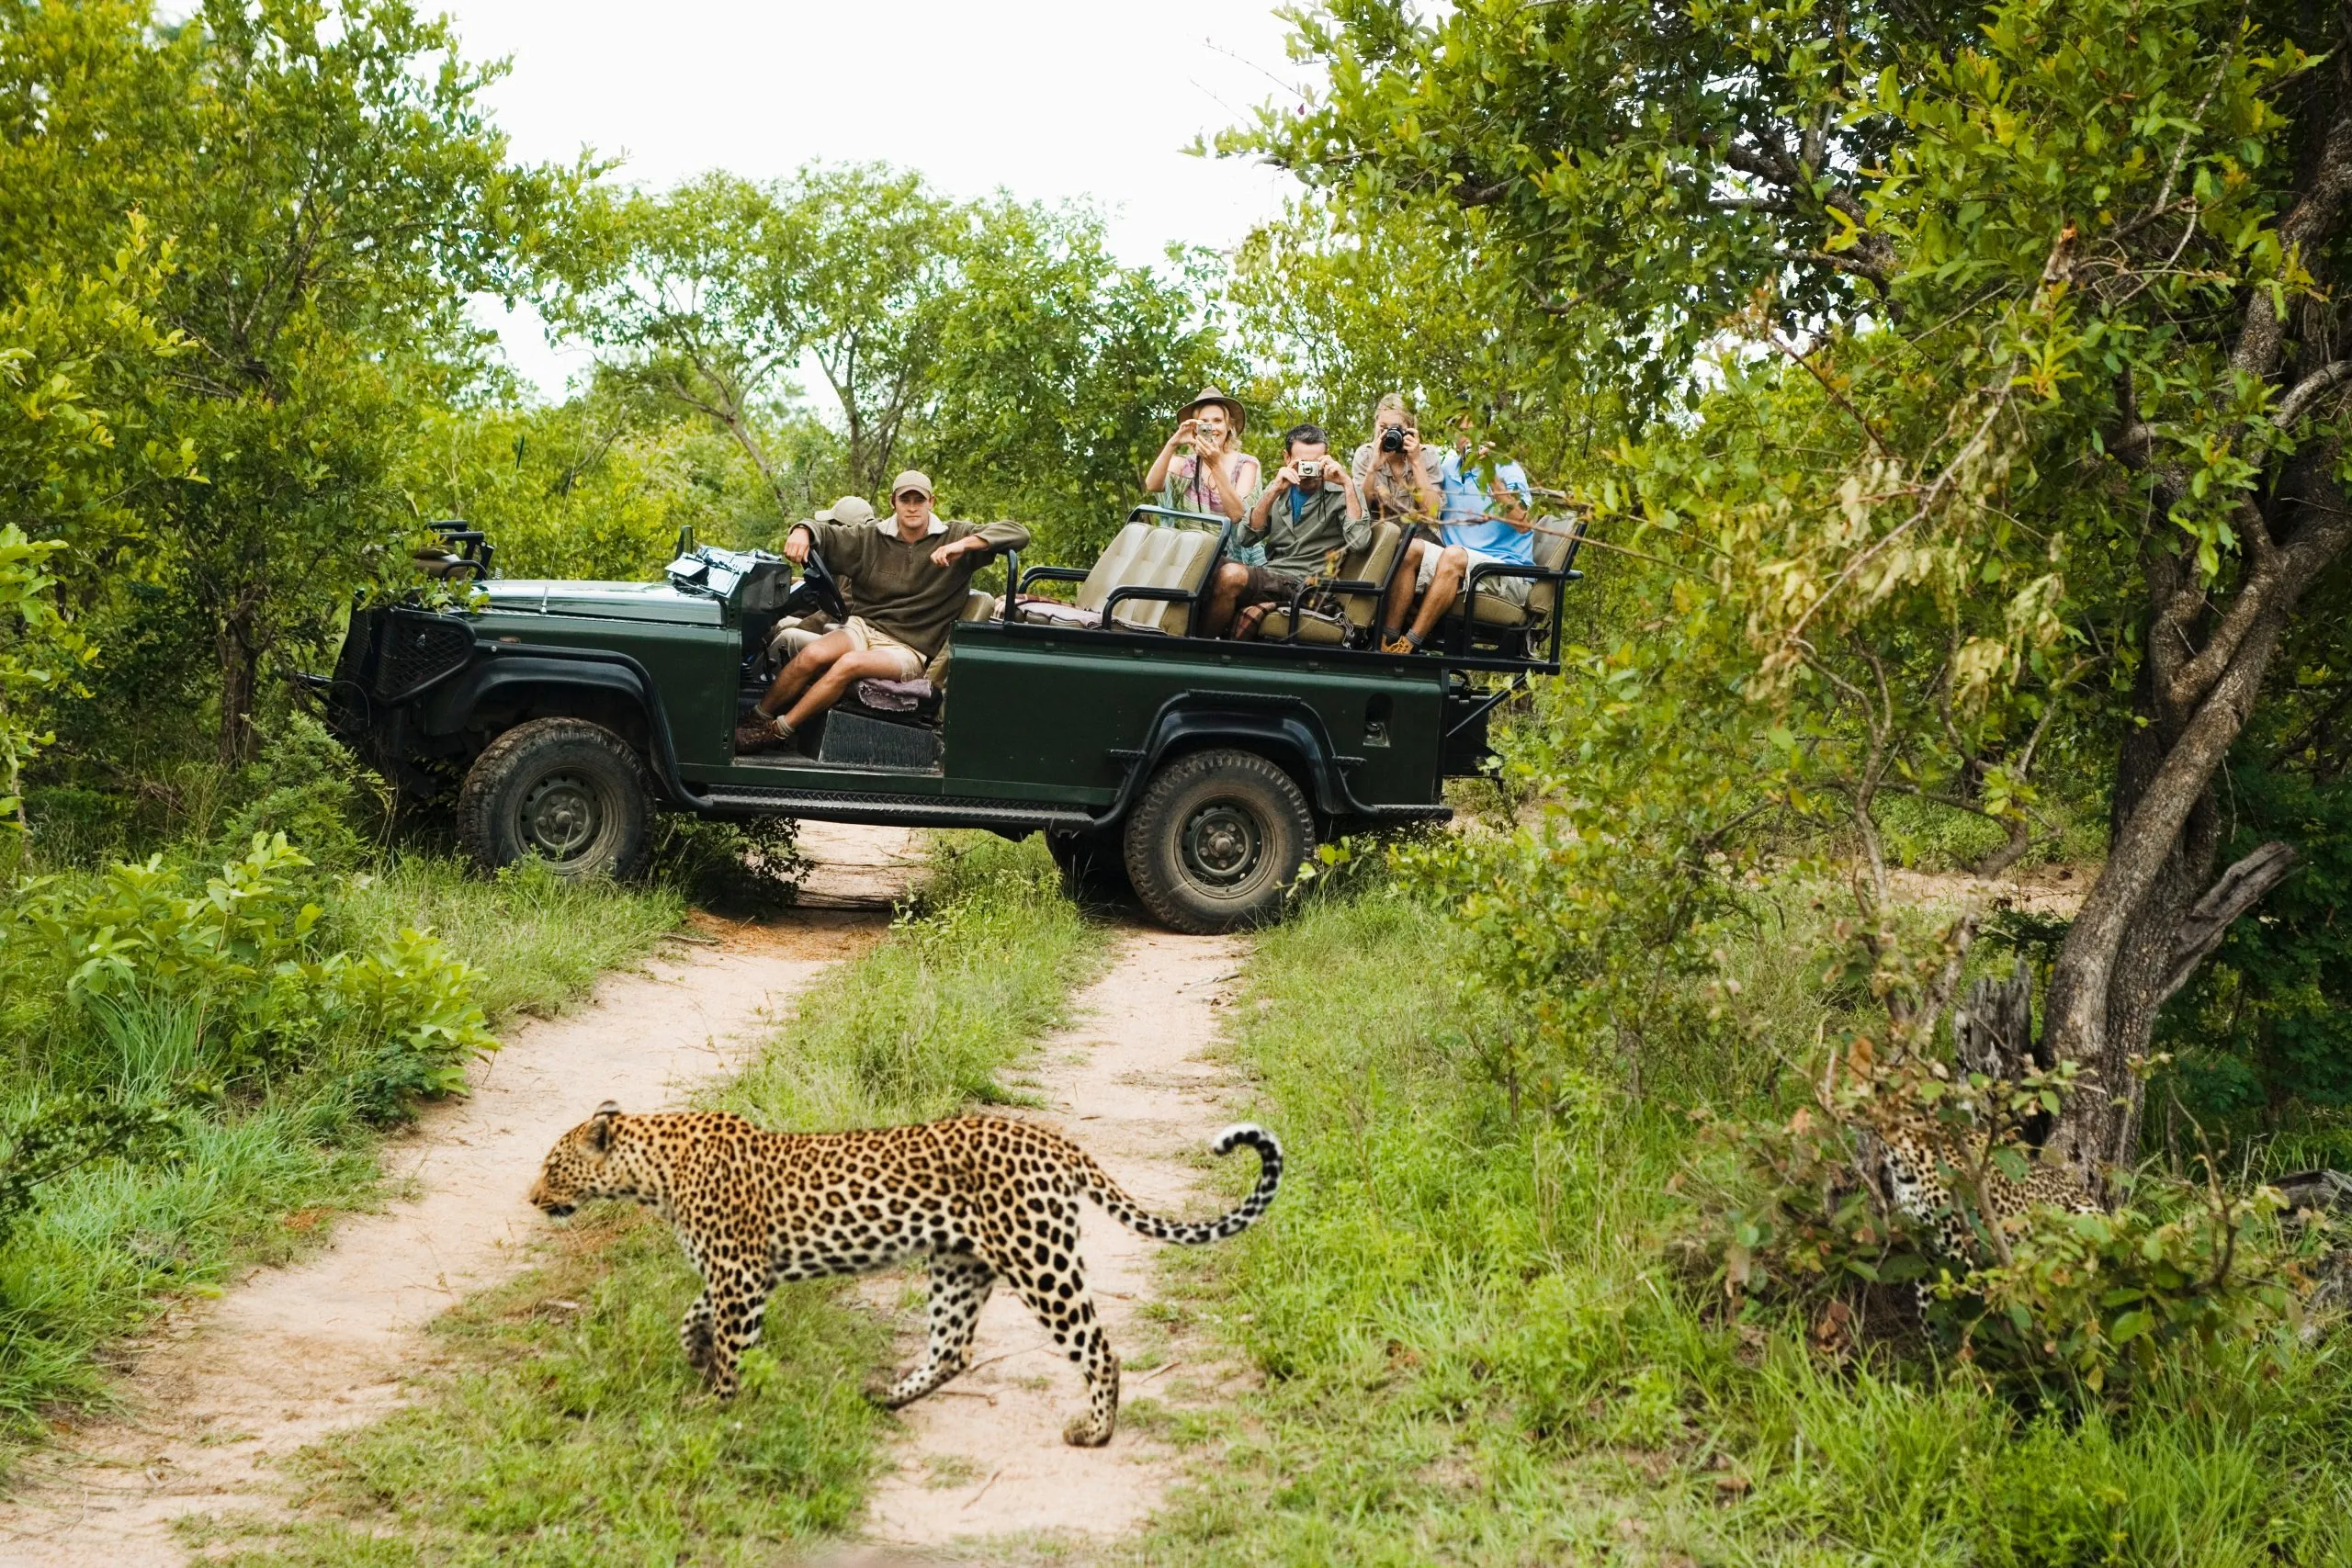 Luipaard steekt weg over met toeristen op achtergrond